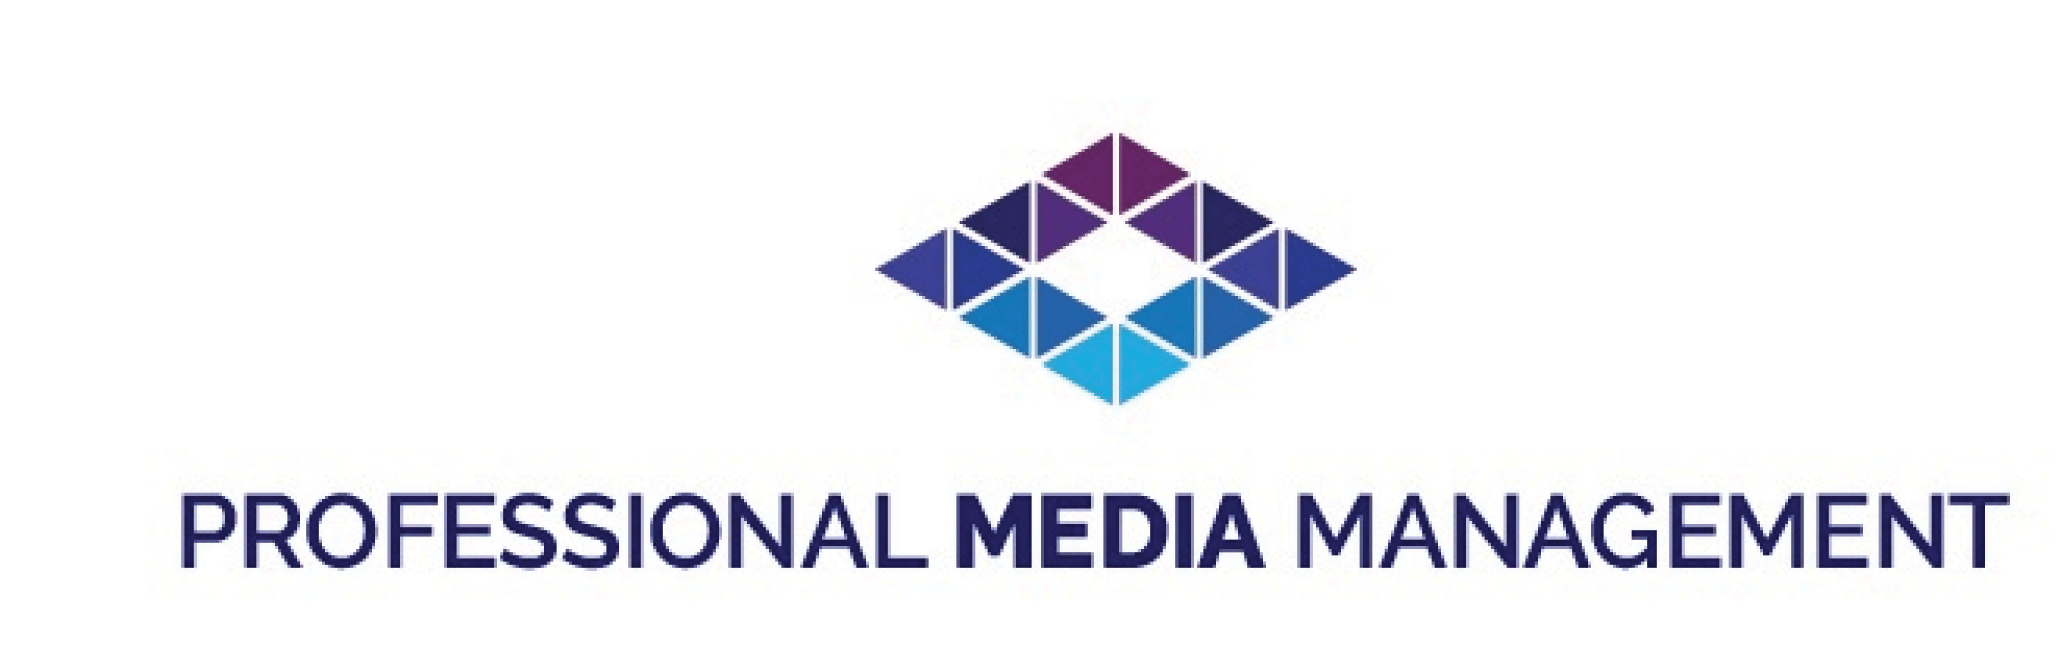 Professional-Media-Management-logo